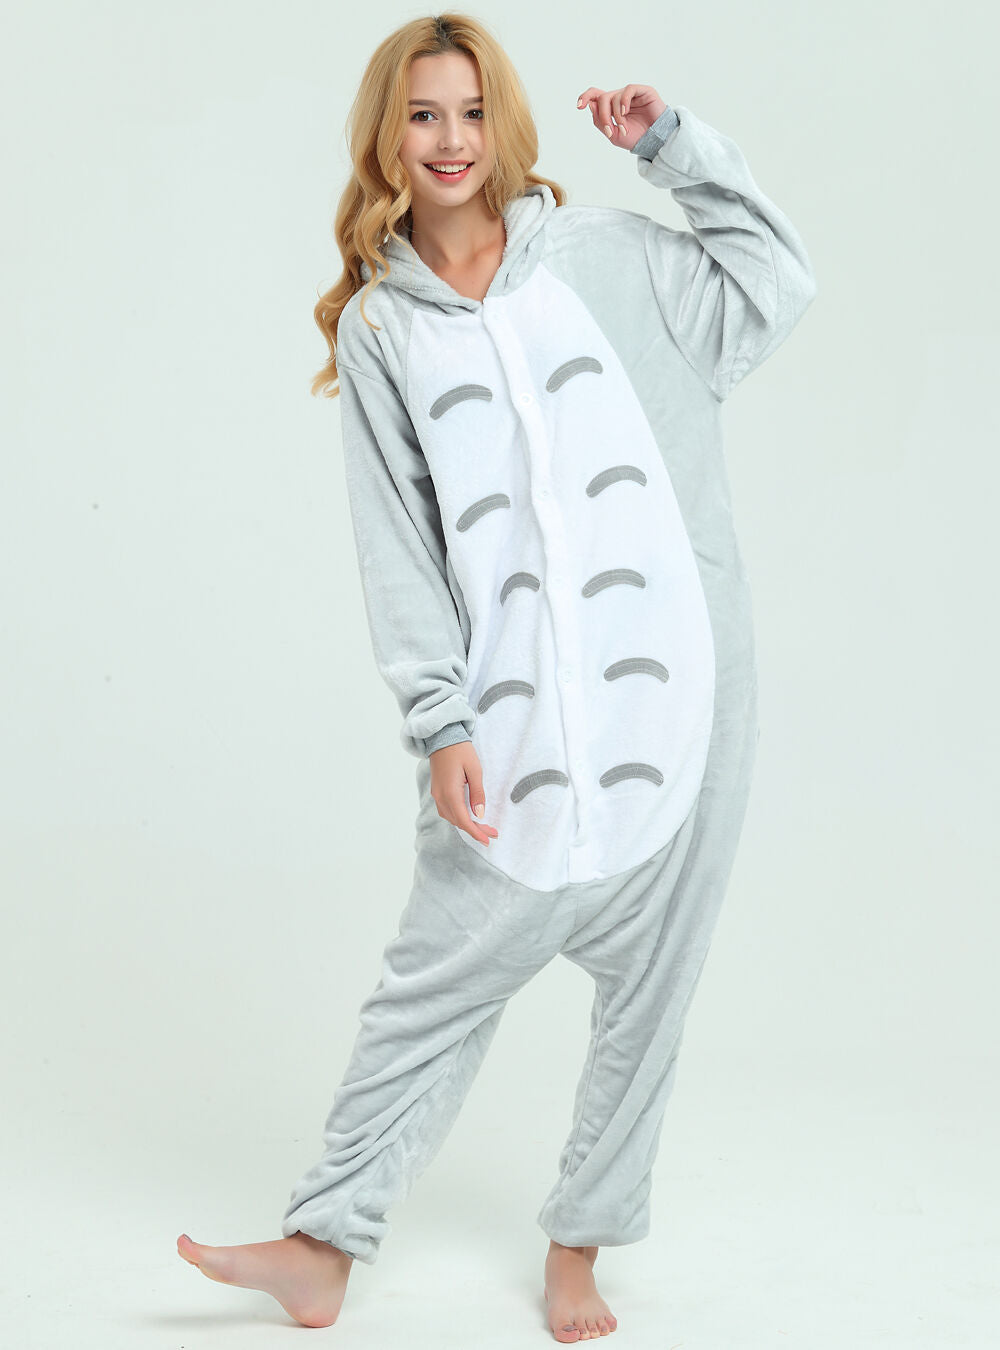 Totoro Onesie Kigurumi Costume For Adults and Teenagers